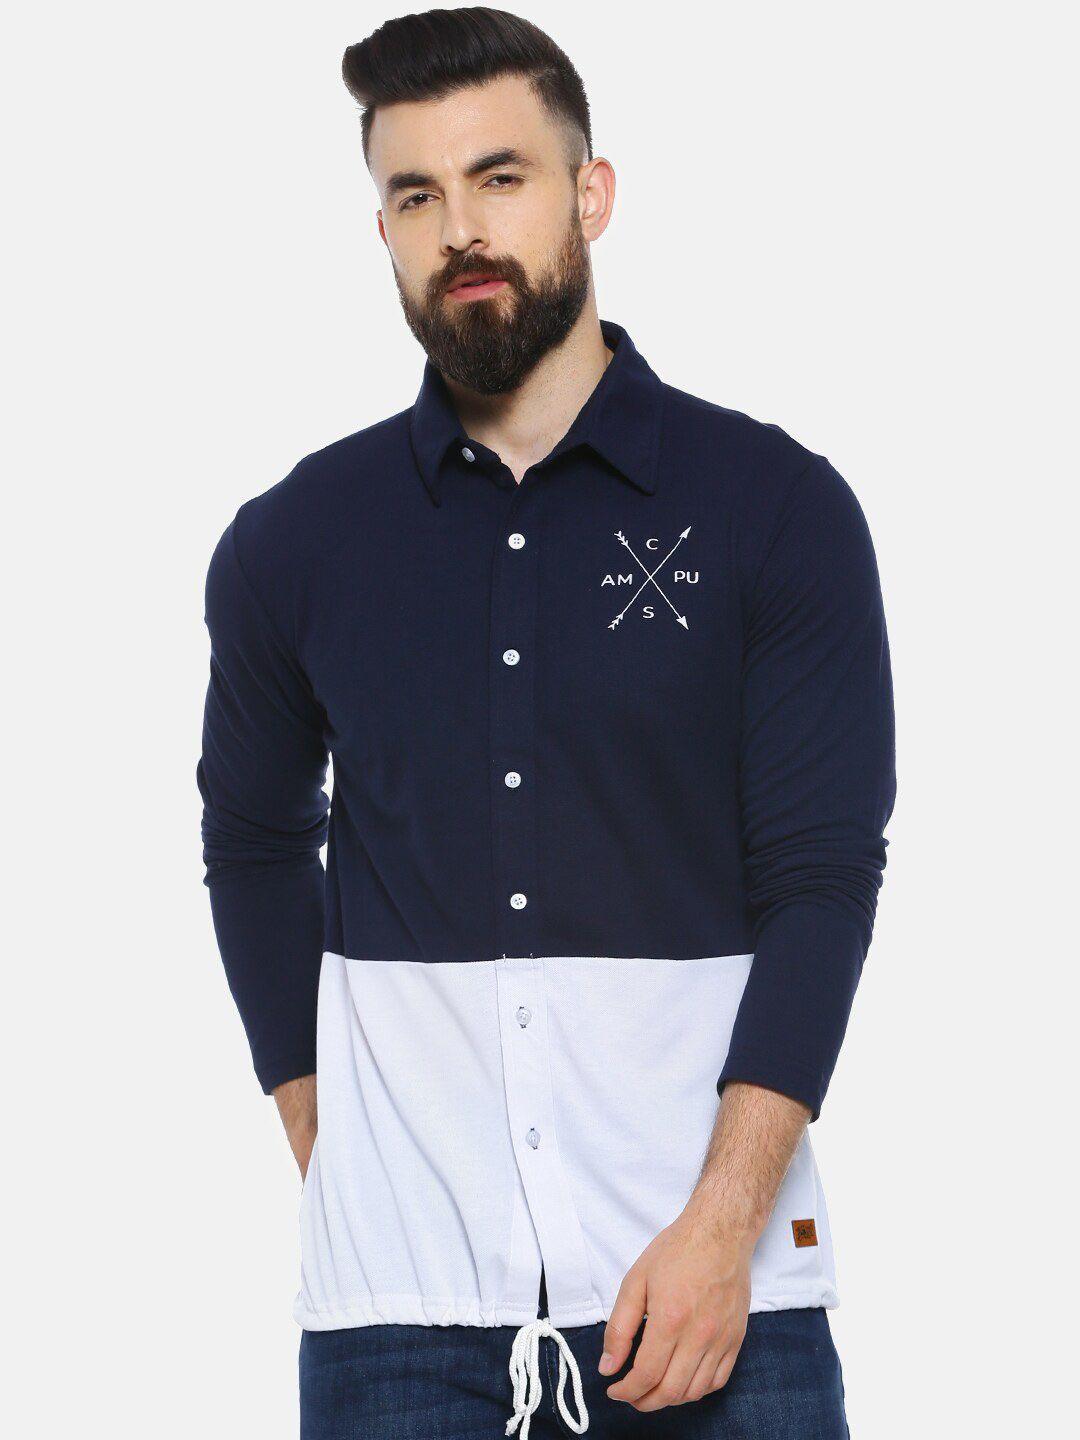 campus sutra men navy blue & white regular fit colourblocked casual shirt